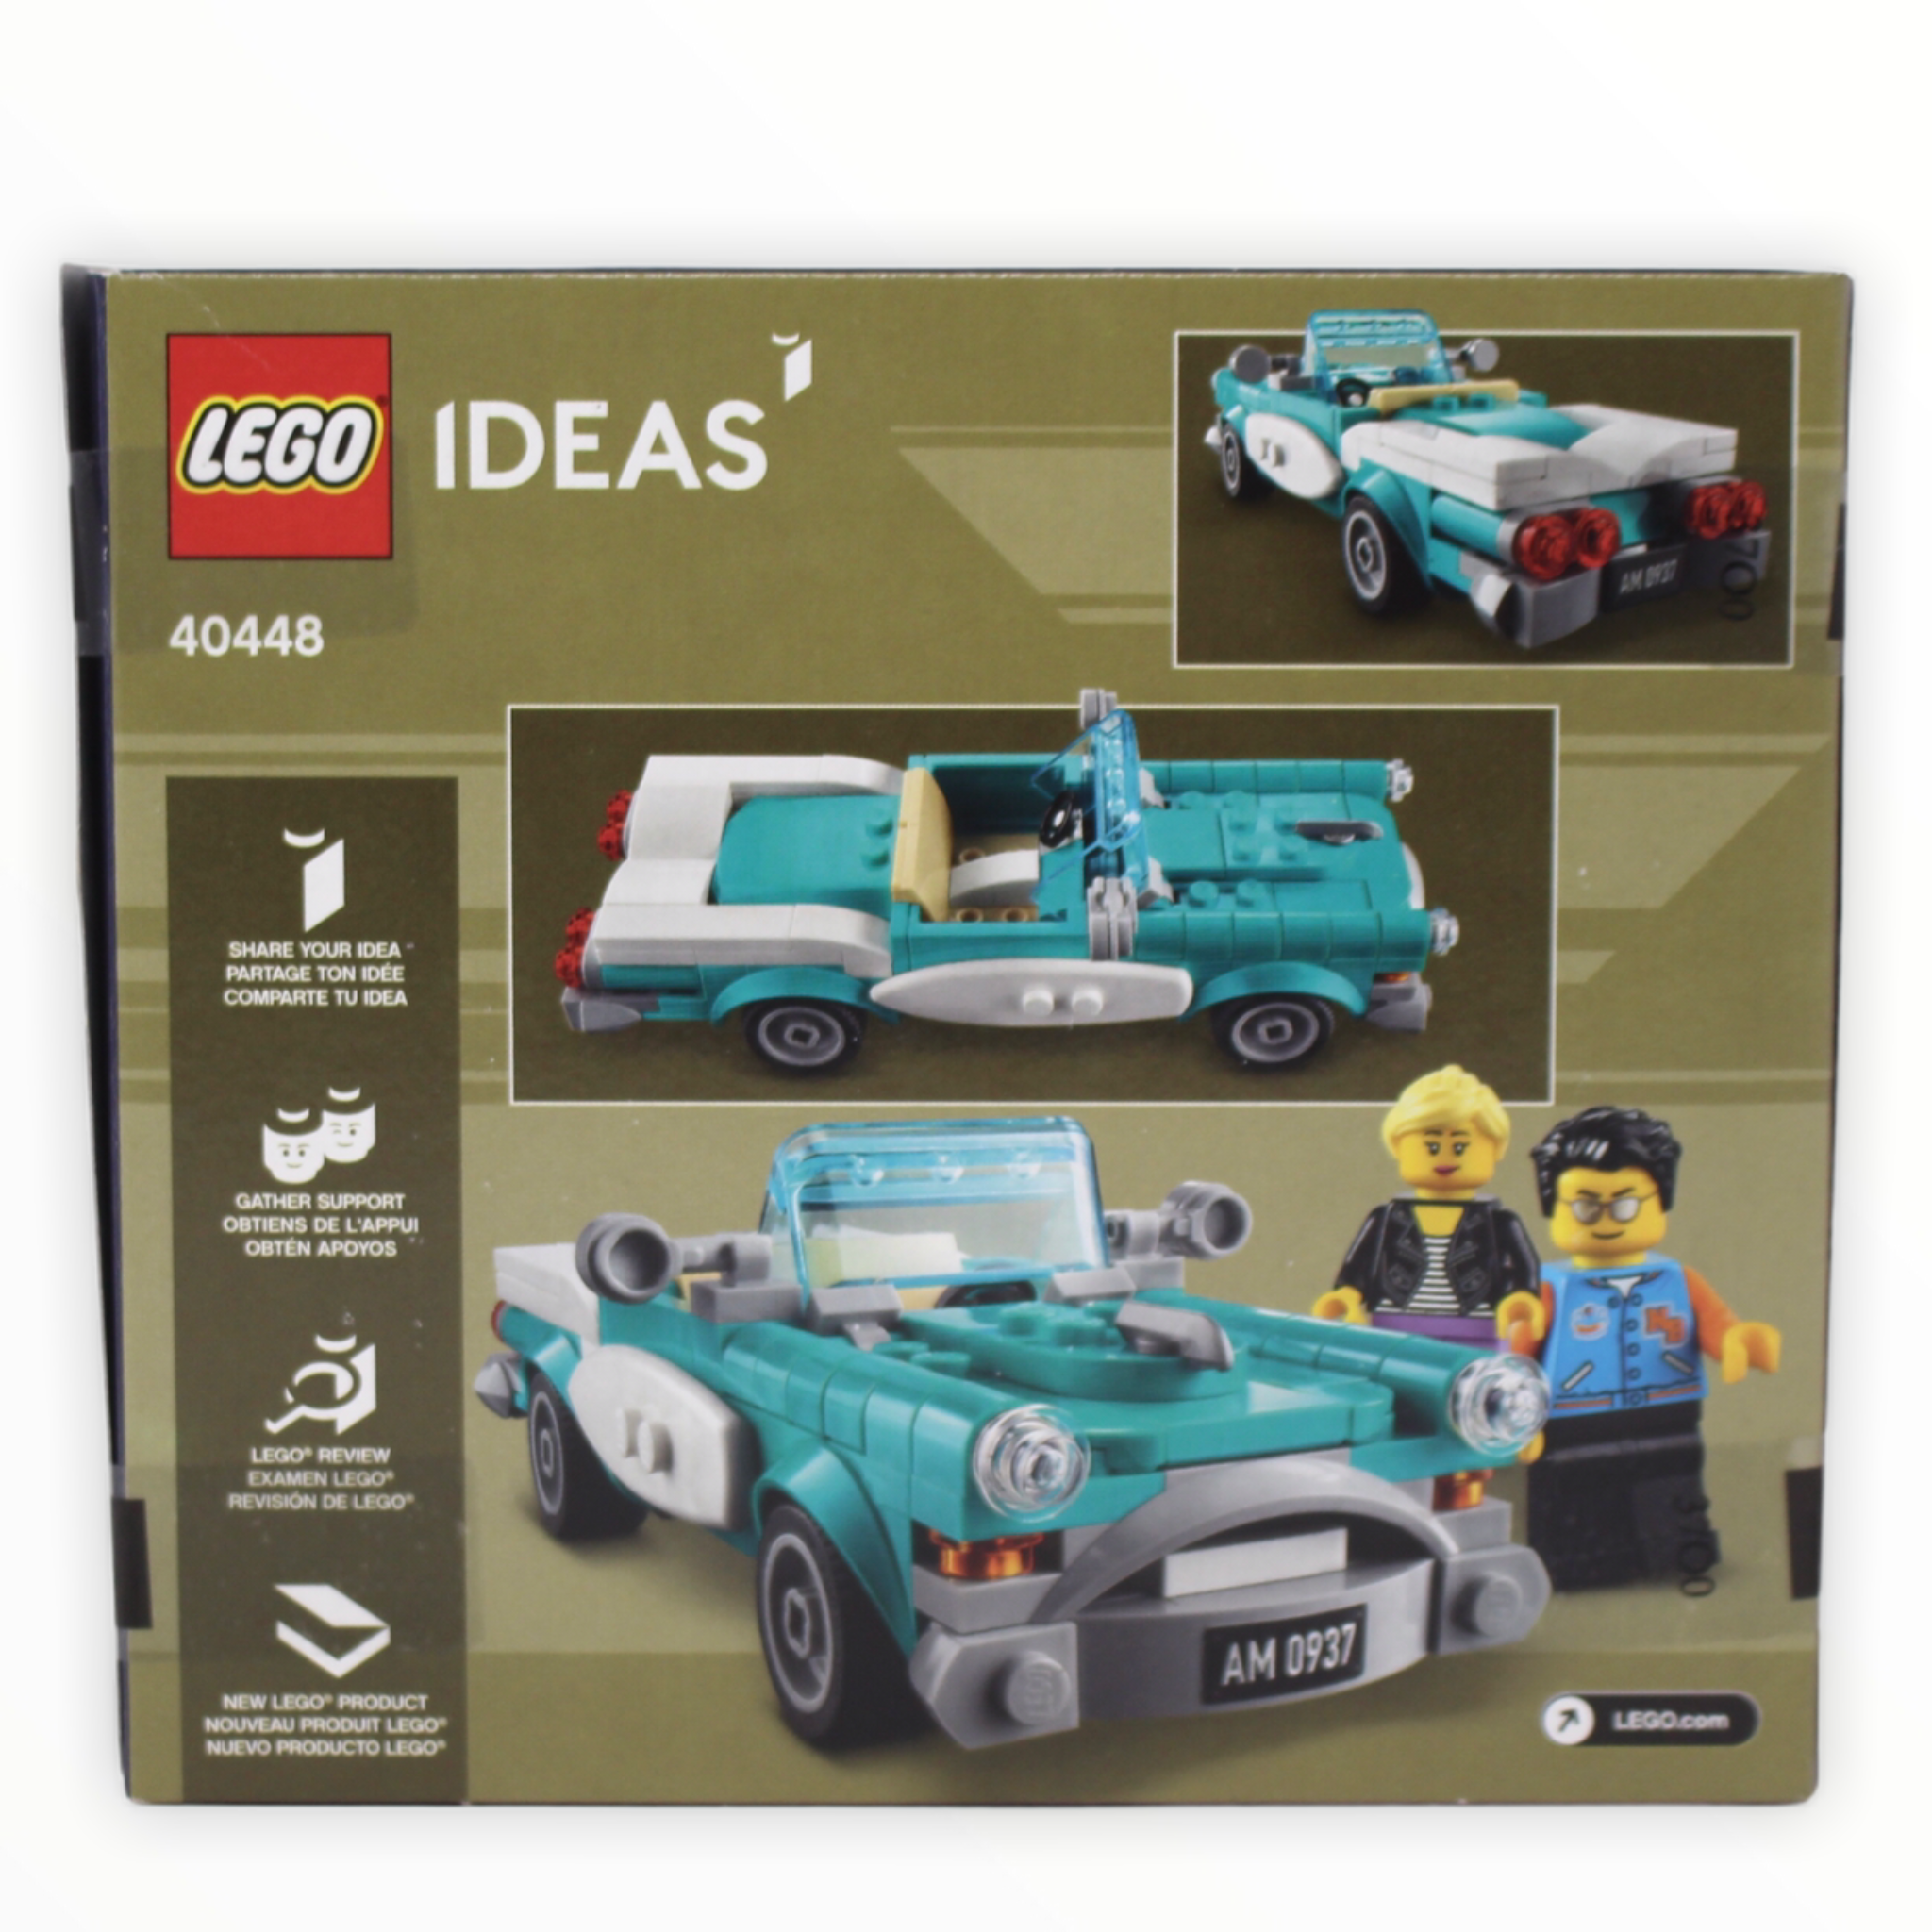 Retired Set 40448 LEGO Ideas Vintage Car